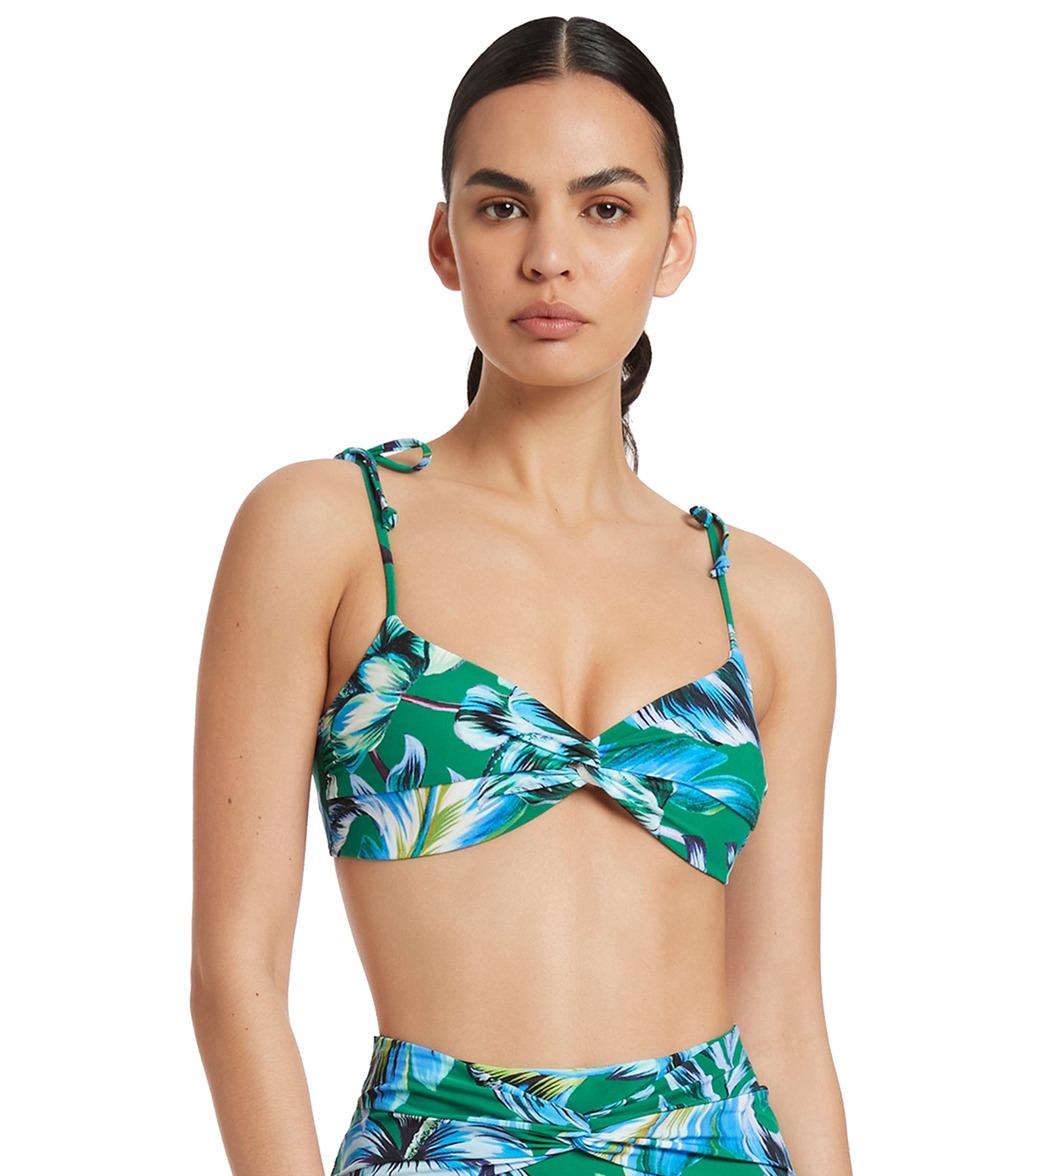 Jets Swimwear Australia Women's Viva Twist Front Bikini Top - Emerald 10 - Swimoutlet.com